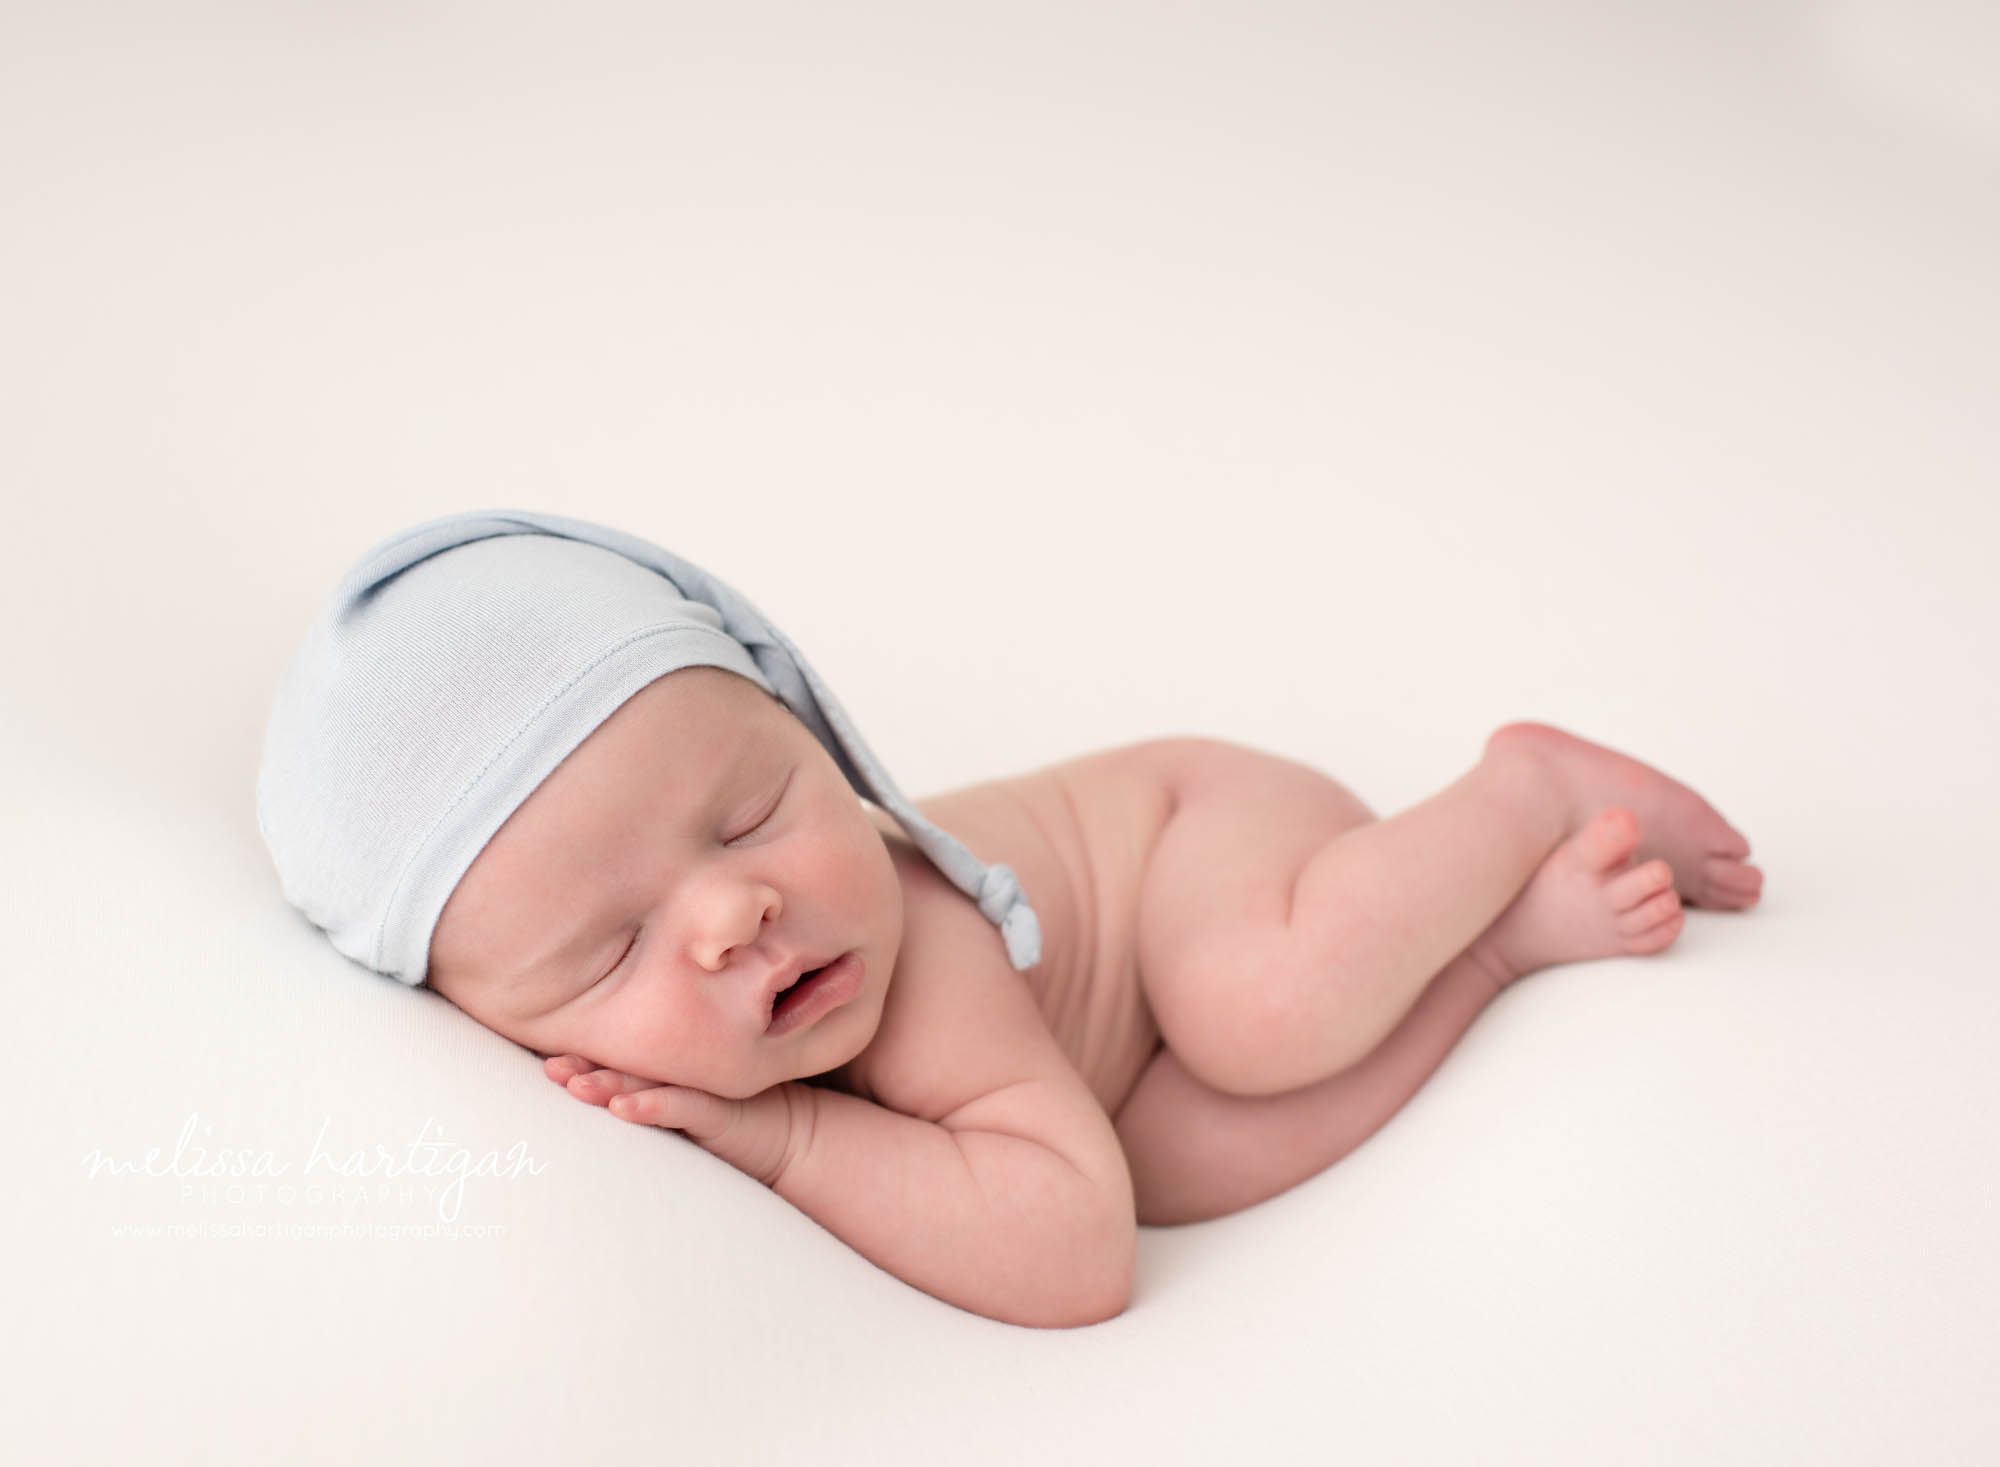 newborn baby boy posed on side wearing light blue sleepy cap sleeping peacefully